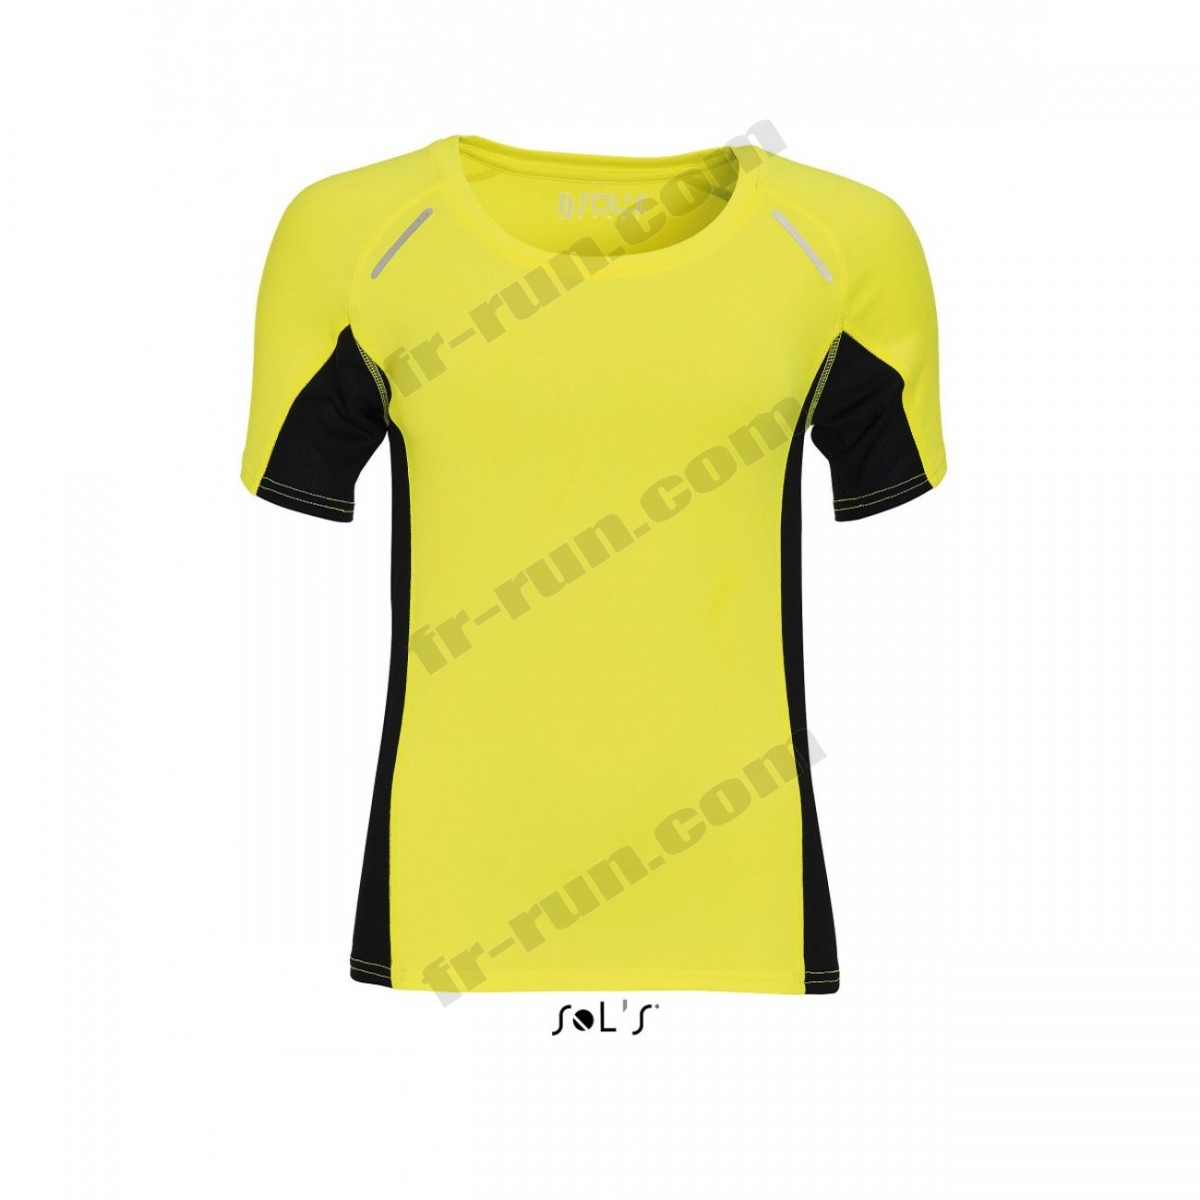 Sol's/running femme SOL'S t-shirt running manches courtes - Femme - 01415 - jaune fluo ◇◇◇ Pas Cher Du Tout - -0